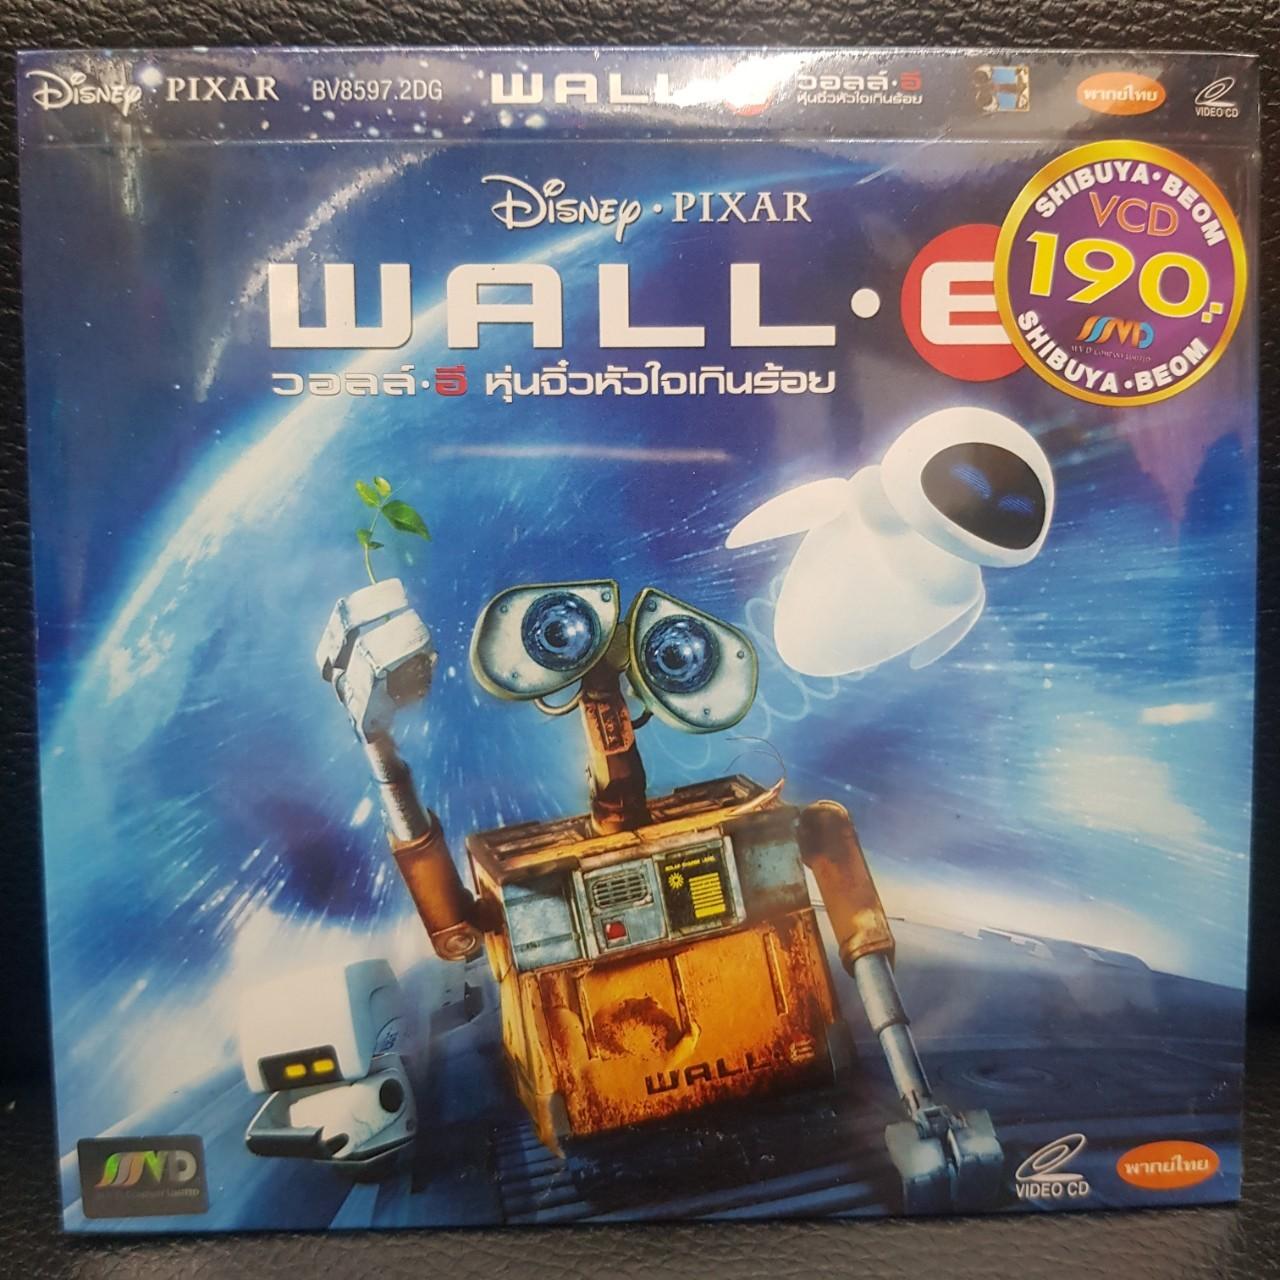 VCDหนัง วอล.อี หุ่นจิ๋วหัวใจเกินร้อย WALL.E  ฉบับ พากย์ไทย (MVDVCD190- วอล.อี หุ่นจิ๋วหัวใจเกินร้อย WALL.E) cartoon การ์ตูน ดิสนีย์ disney PIXAR MVD หนัง ภาพยนตร์ ดูหนัง ดีวีโอซีดี วีซีดี VCD มาสเตอร์แท้ STARMART